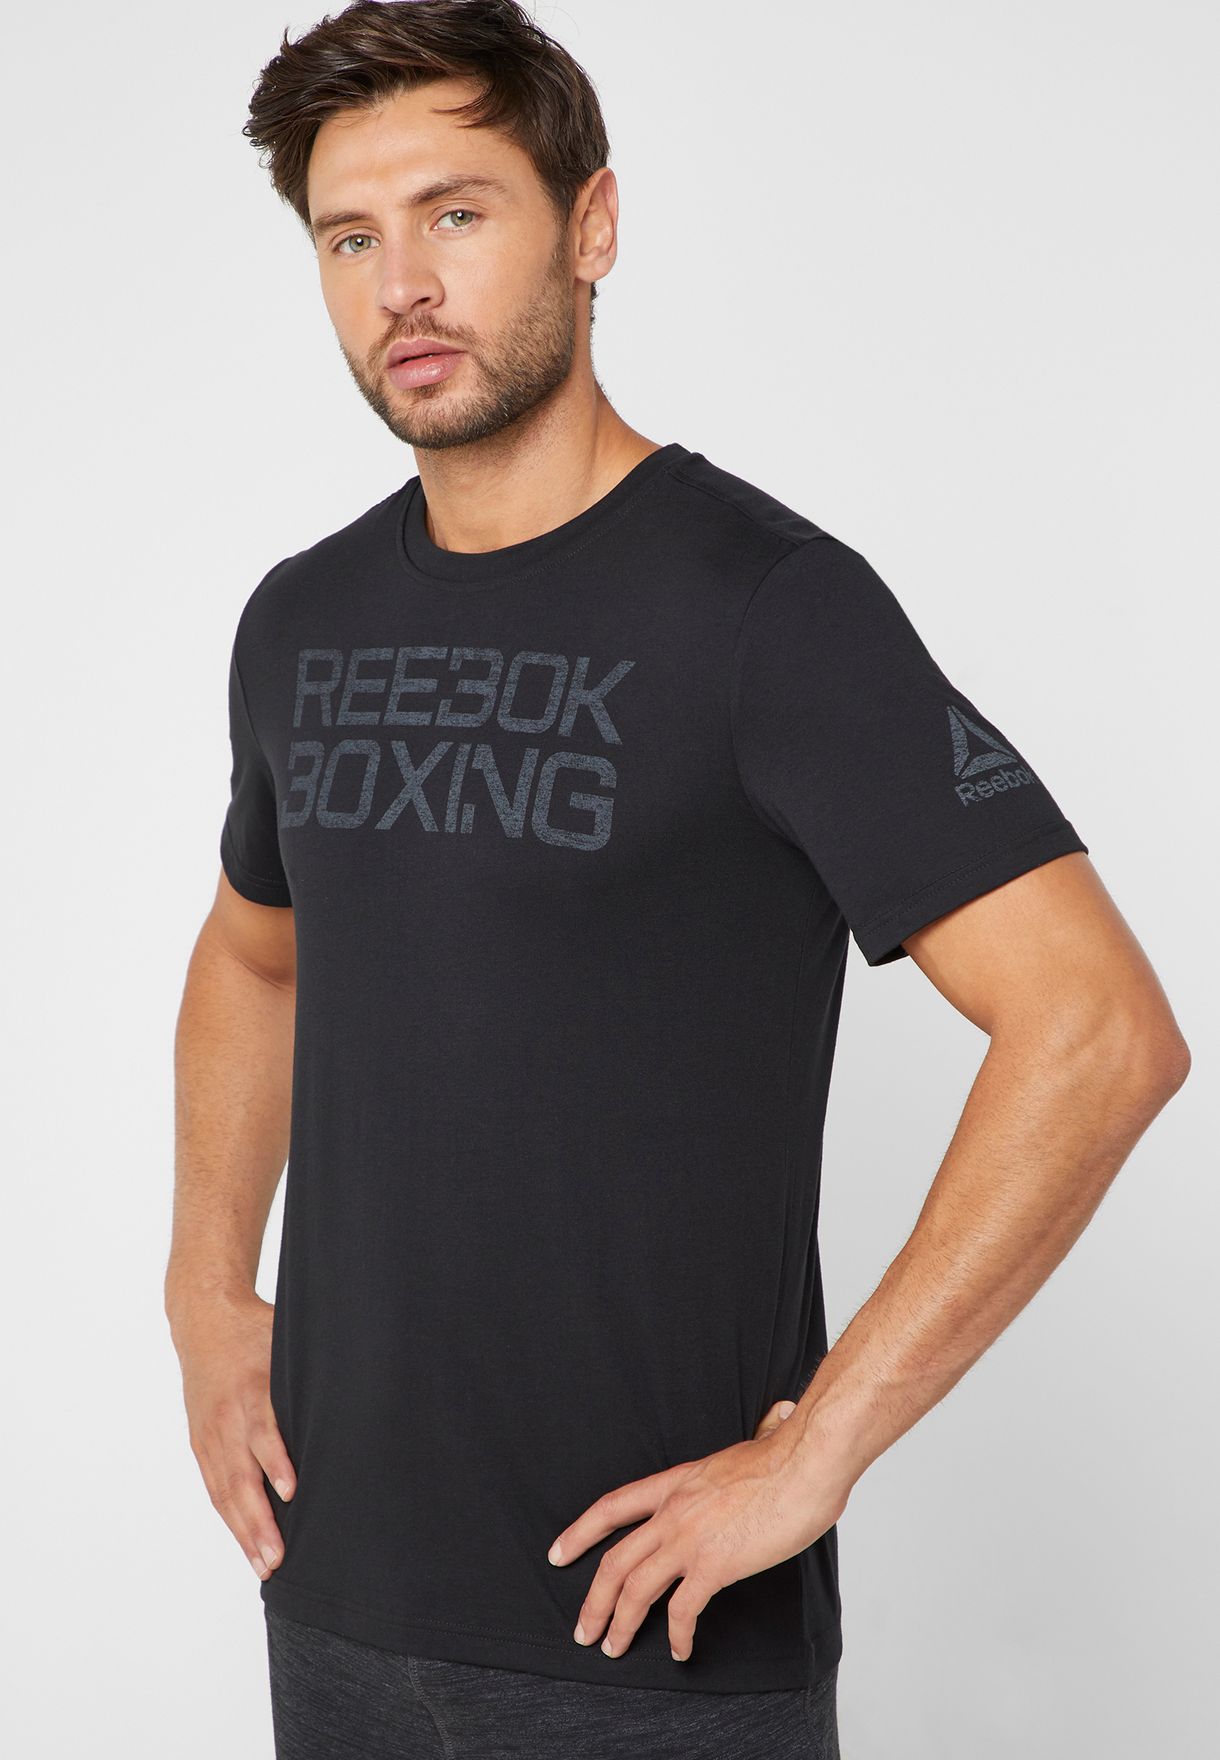 reebok boxing t shirt